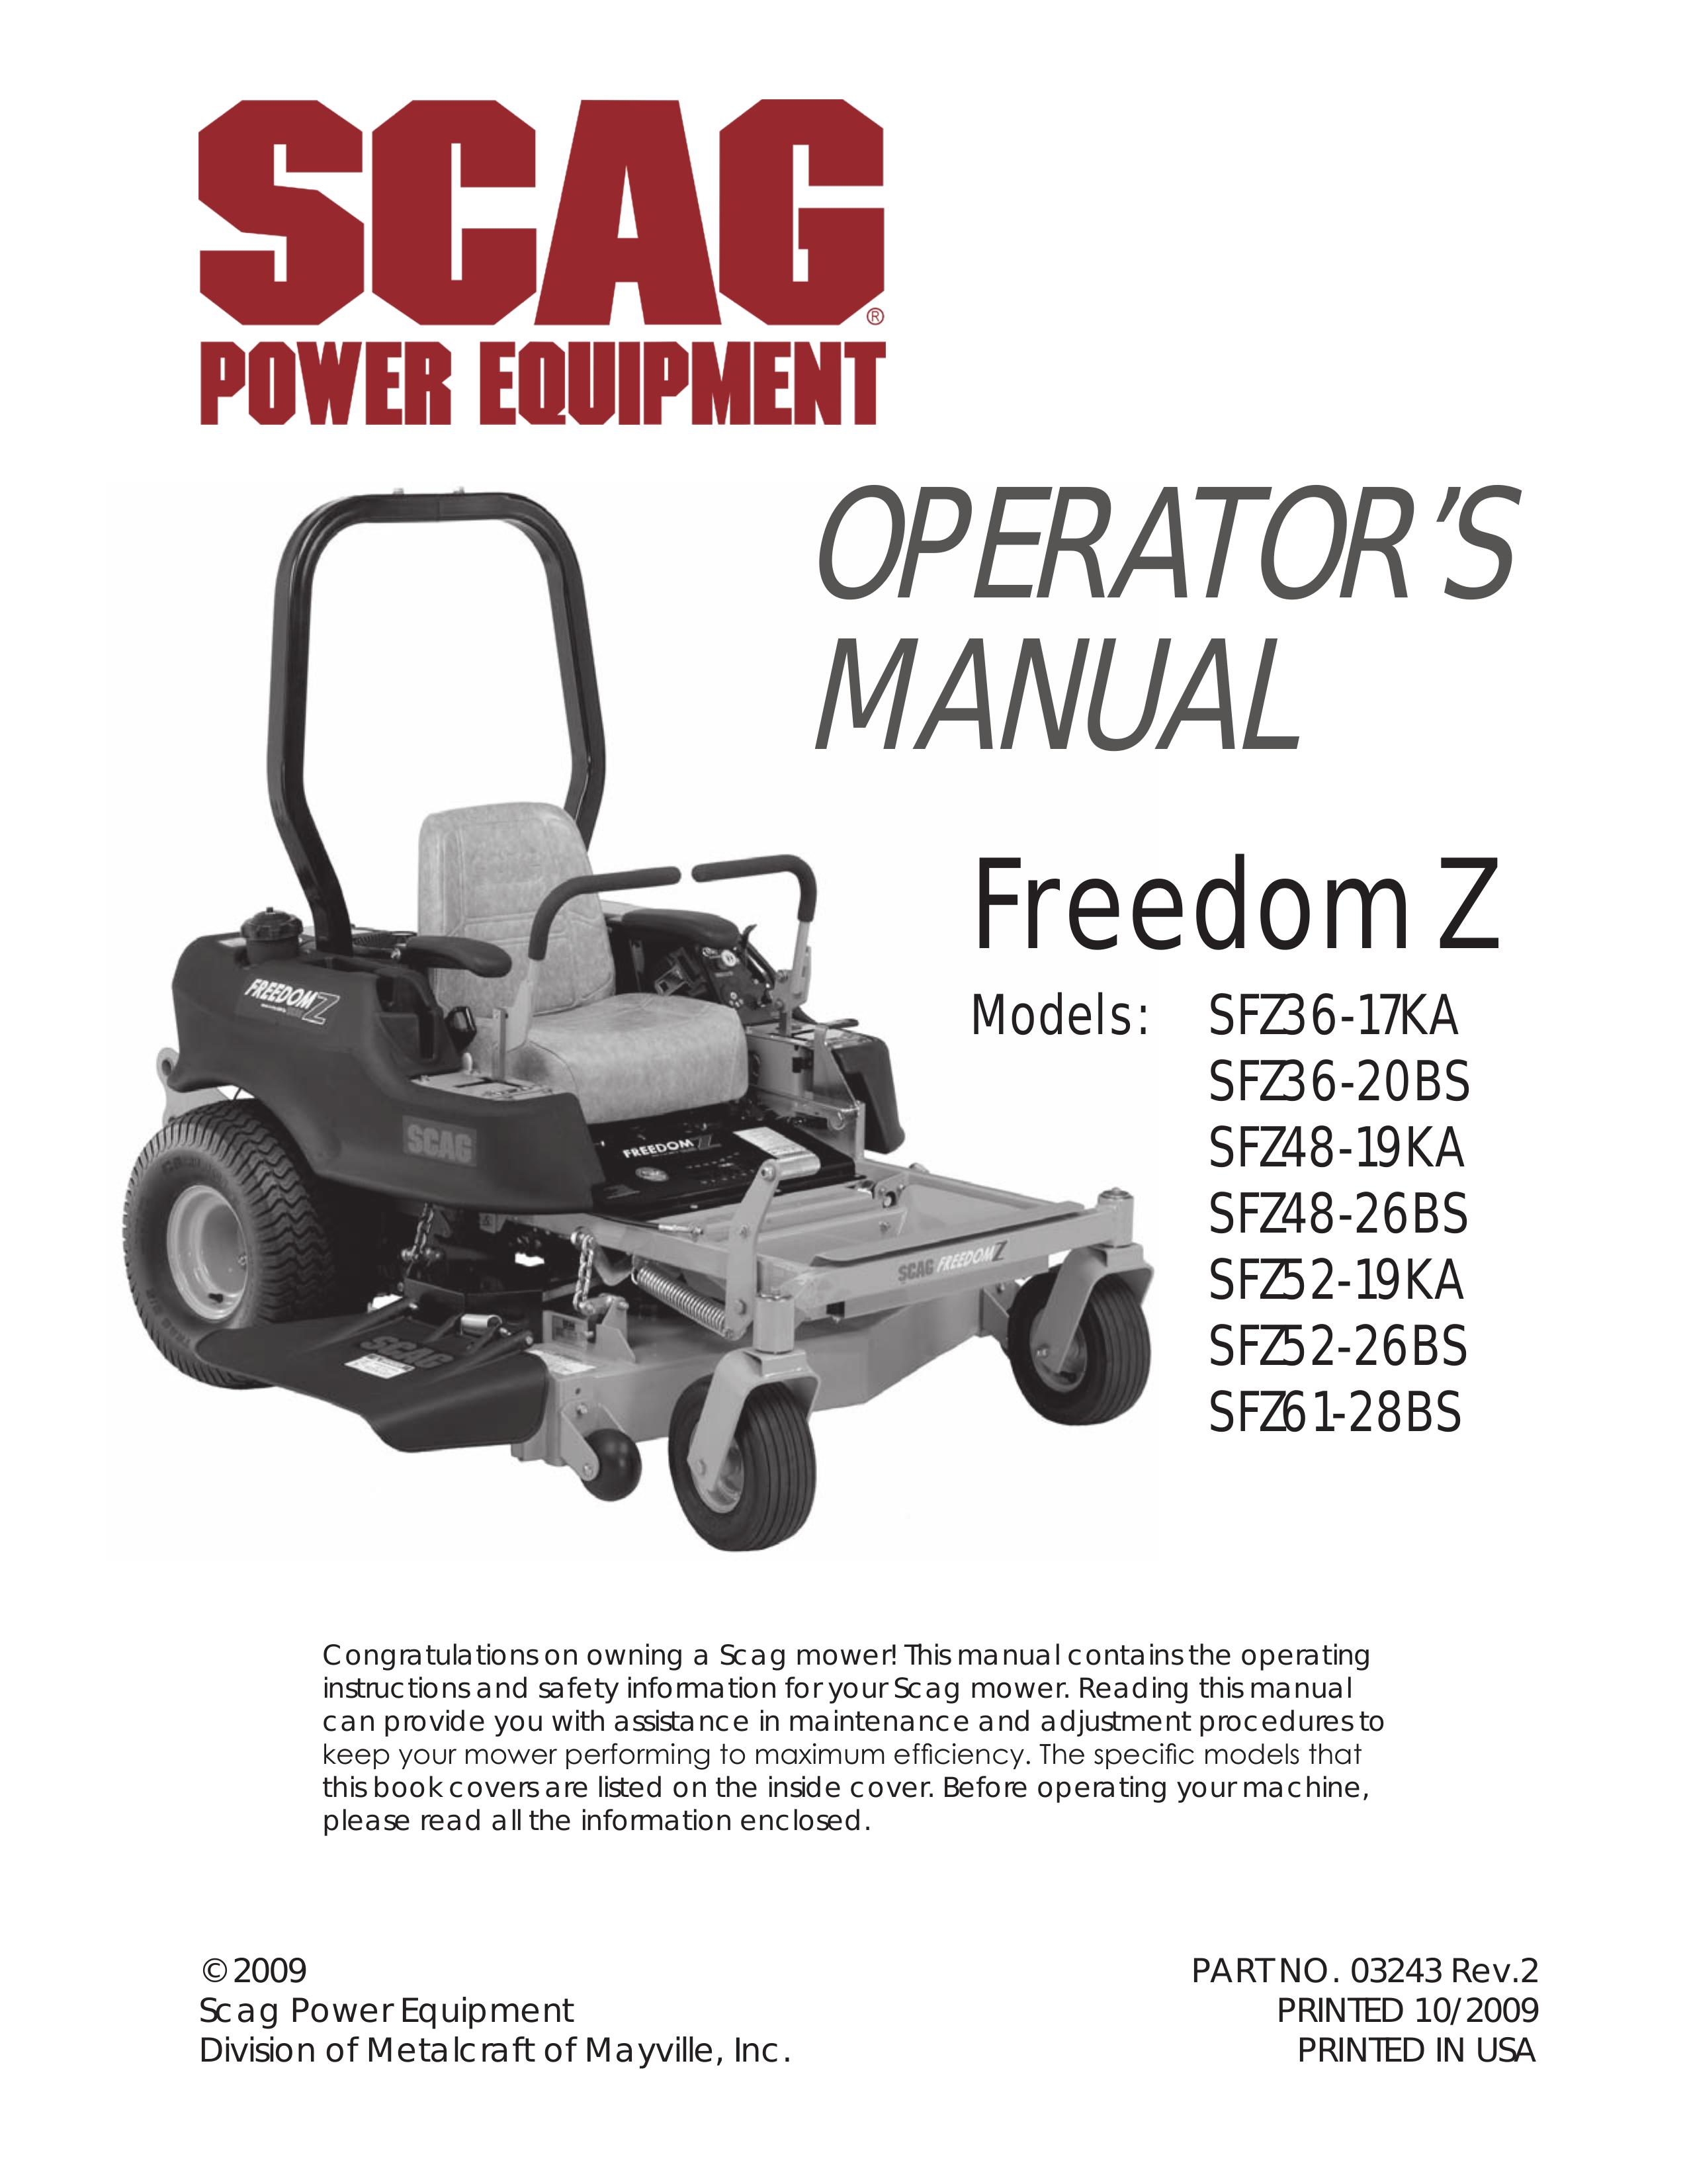 Scag Power Equipment SFZ36-17KA Lawn Mower User Manual